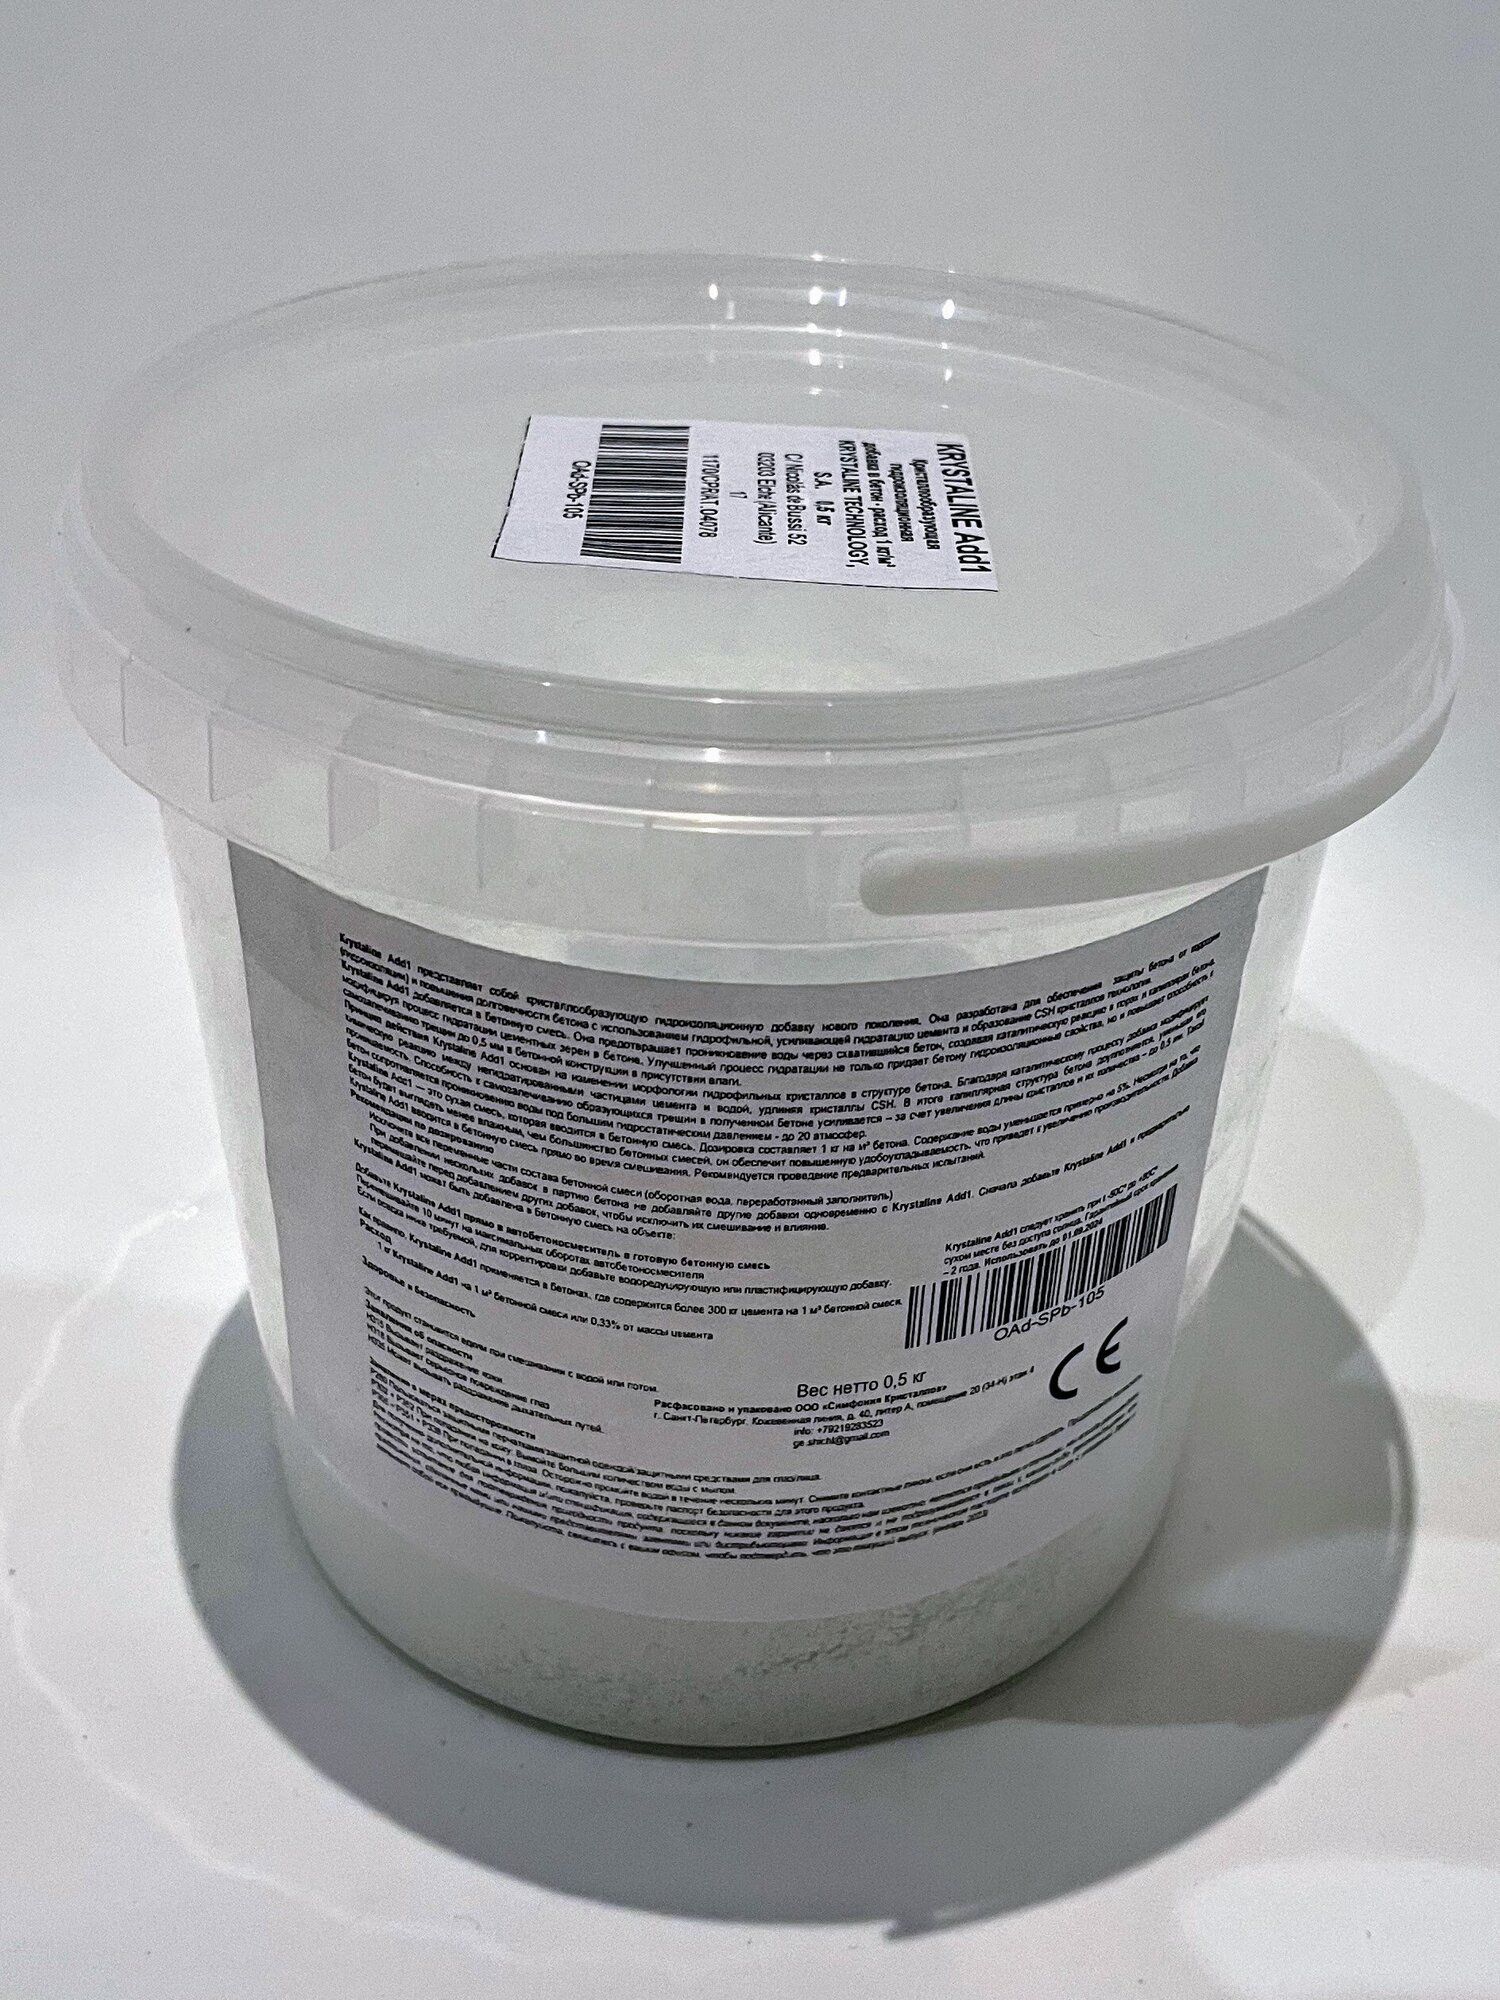 Krystaline Add 1 ,самозалечивание трещин, гидроизоляционная добавка в бетон, 500 г - фотография № 6